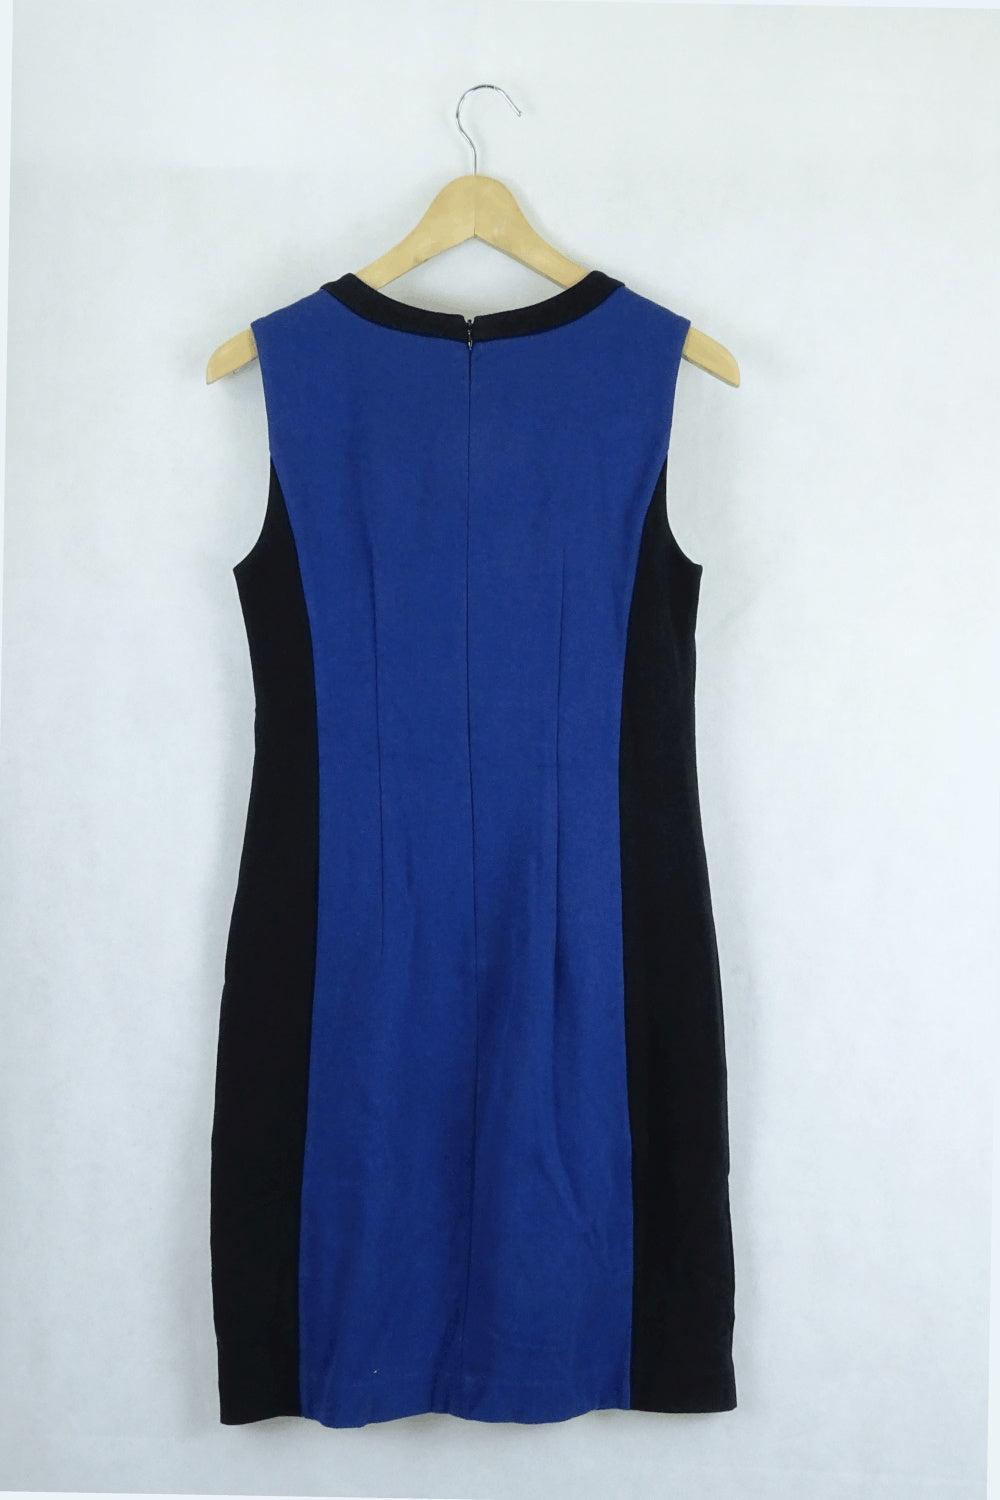 DKNY Donna Karan  Black And Blue Dress 4